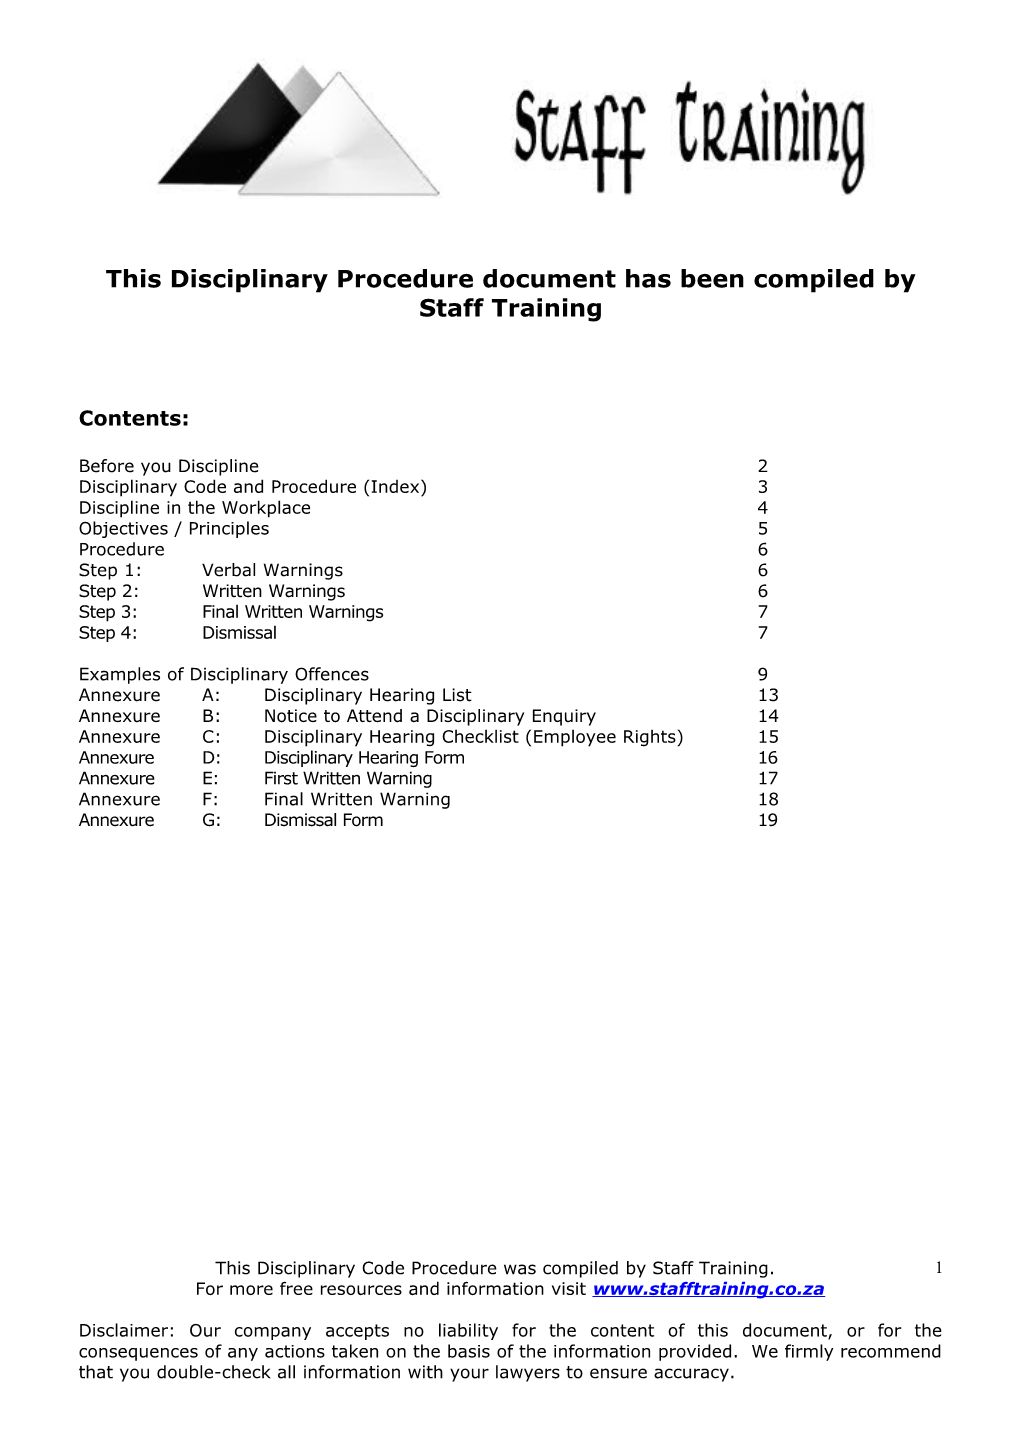 Disciplinary Code And Procedure